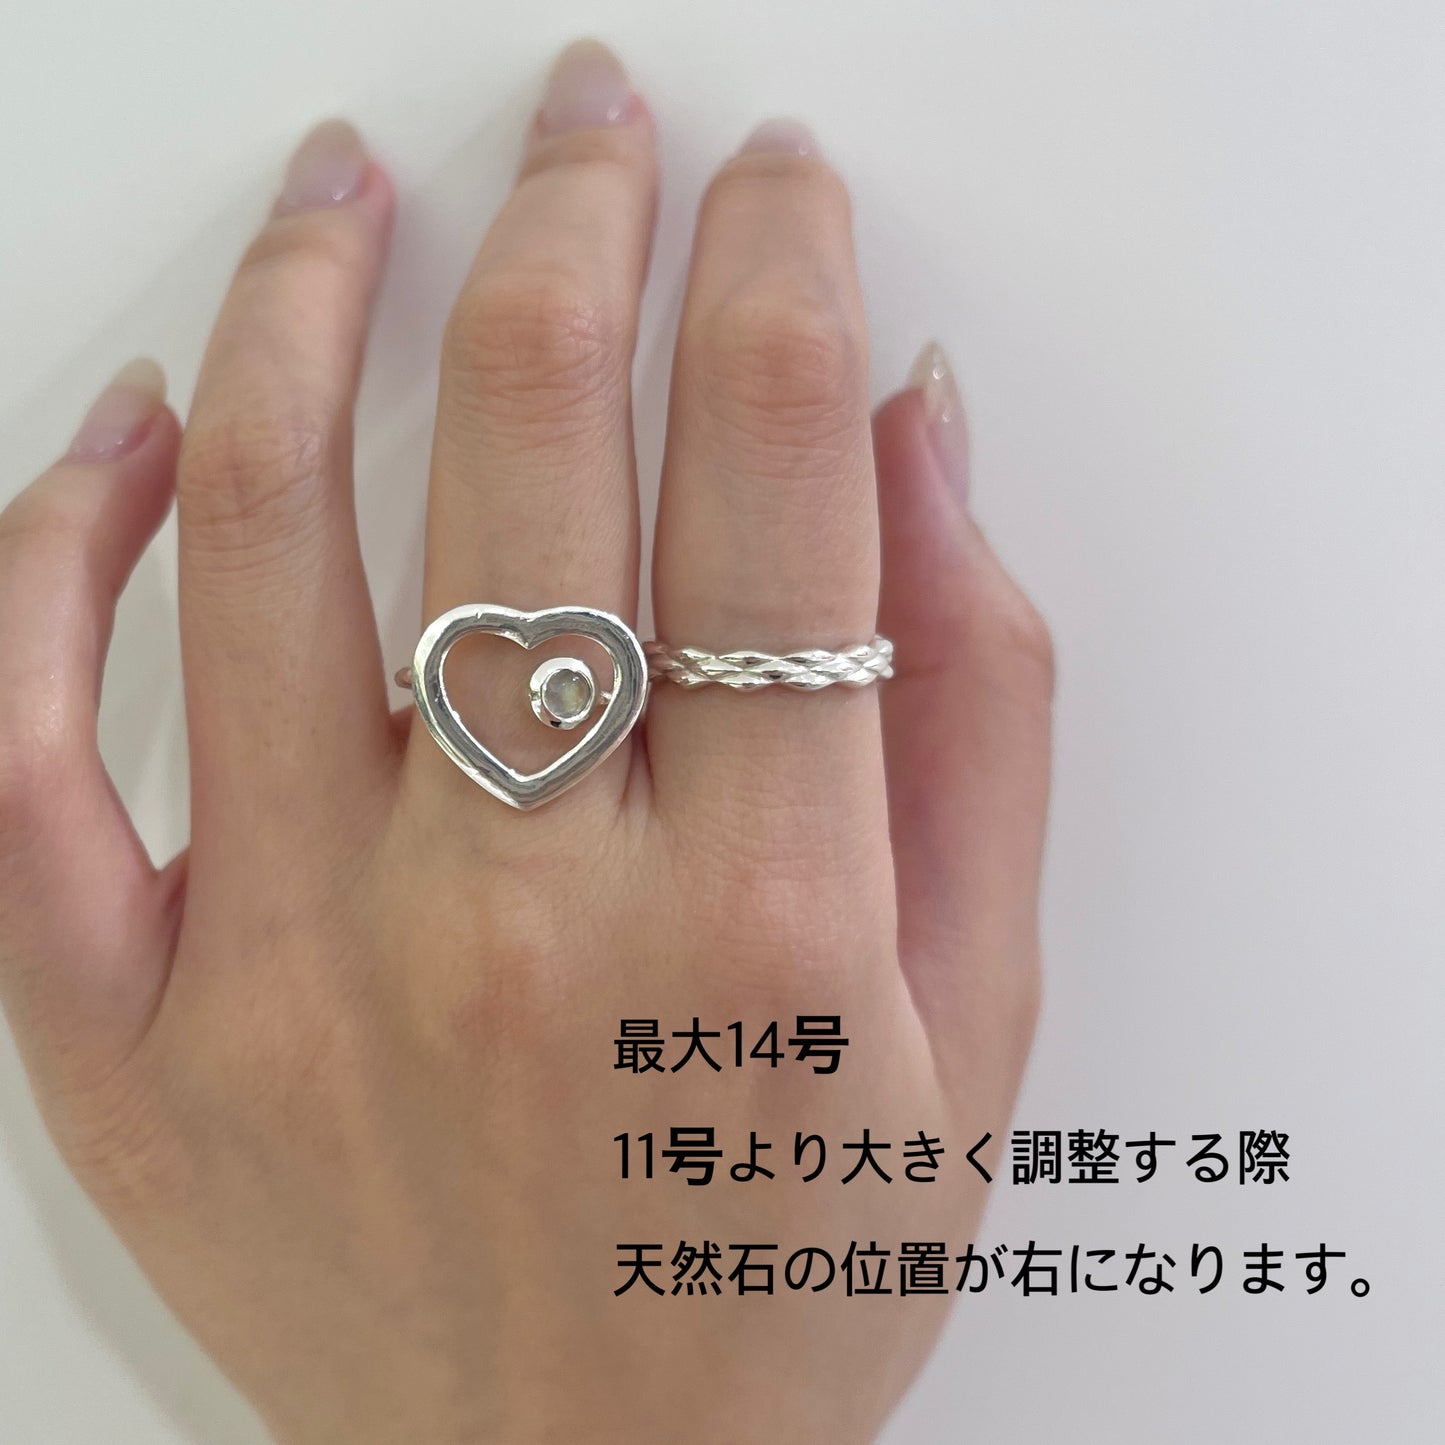 Heart 1stone ring